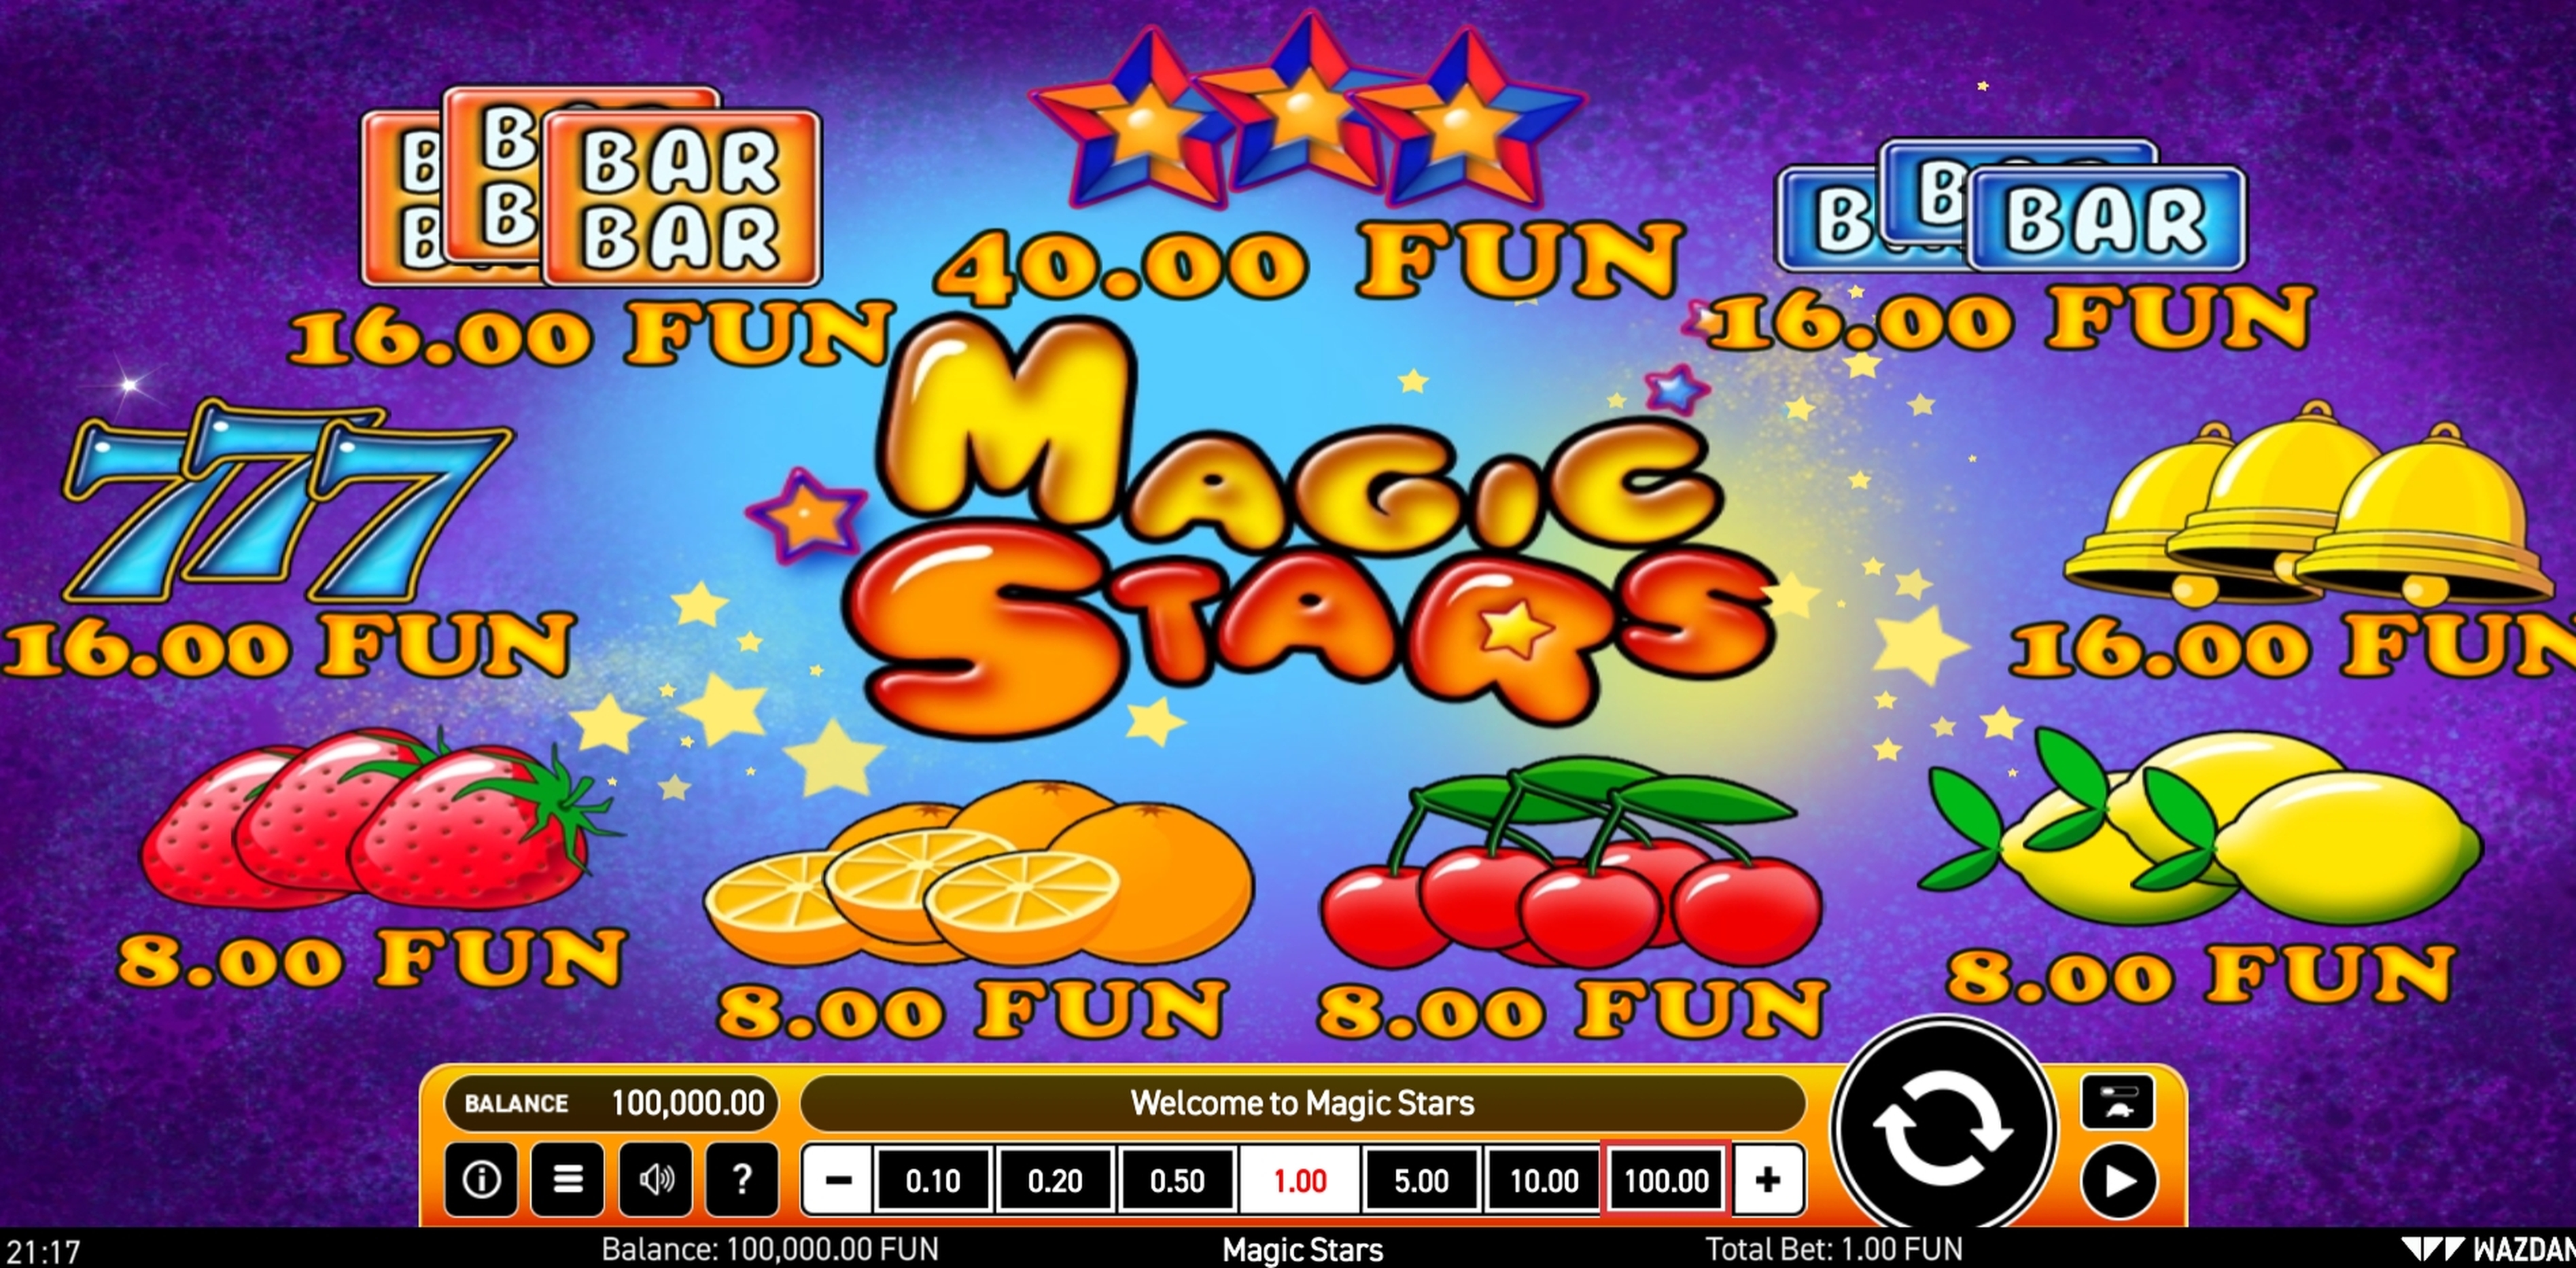 Info of Magic Stars Slot Game by Wazdan